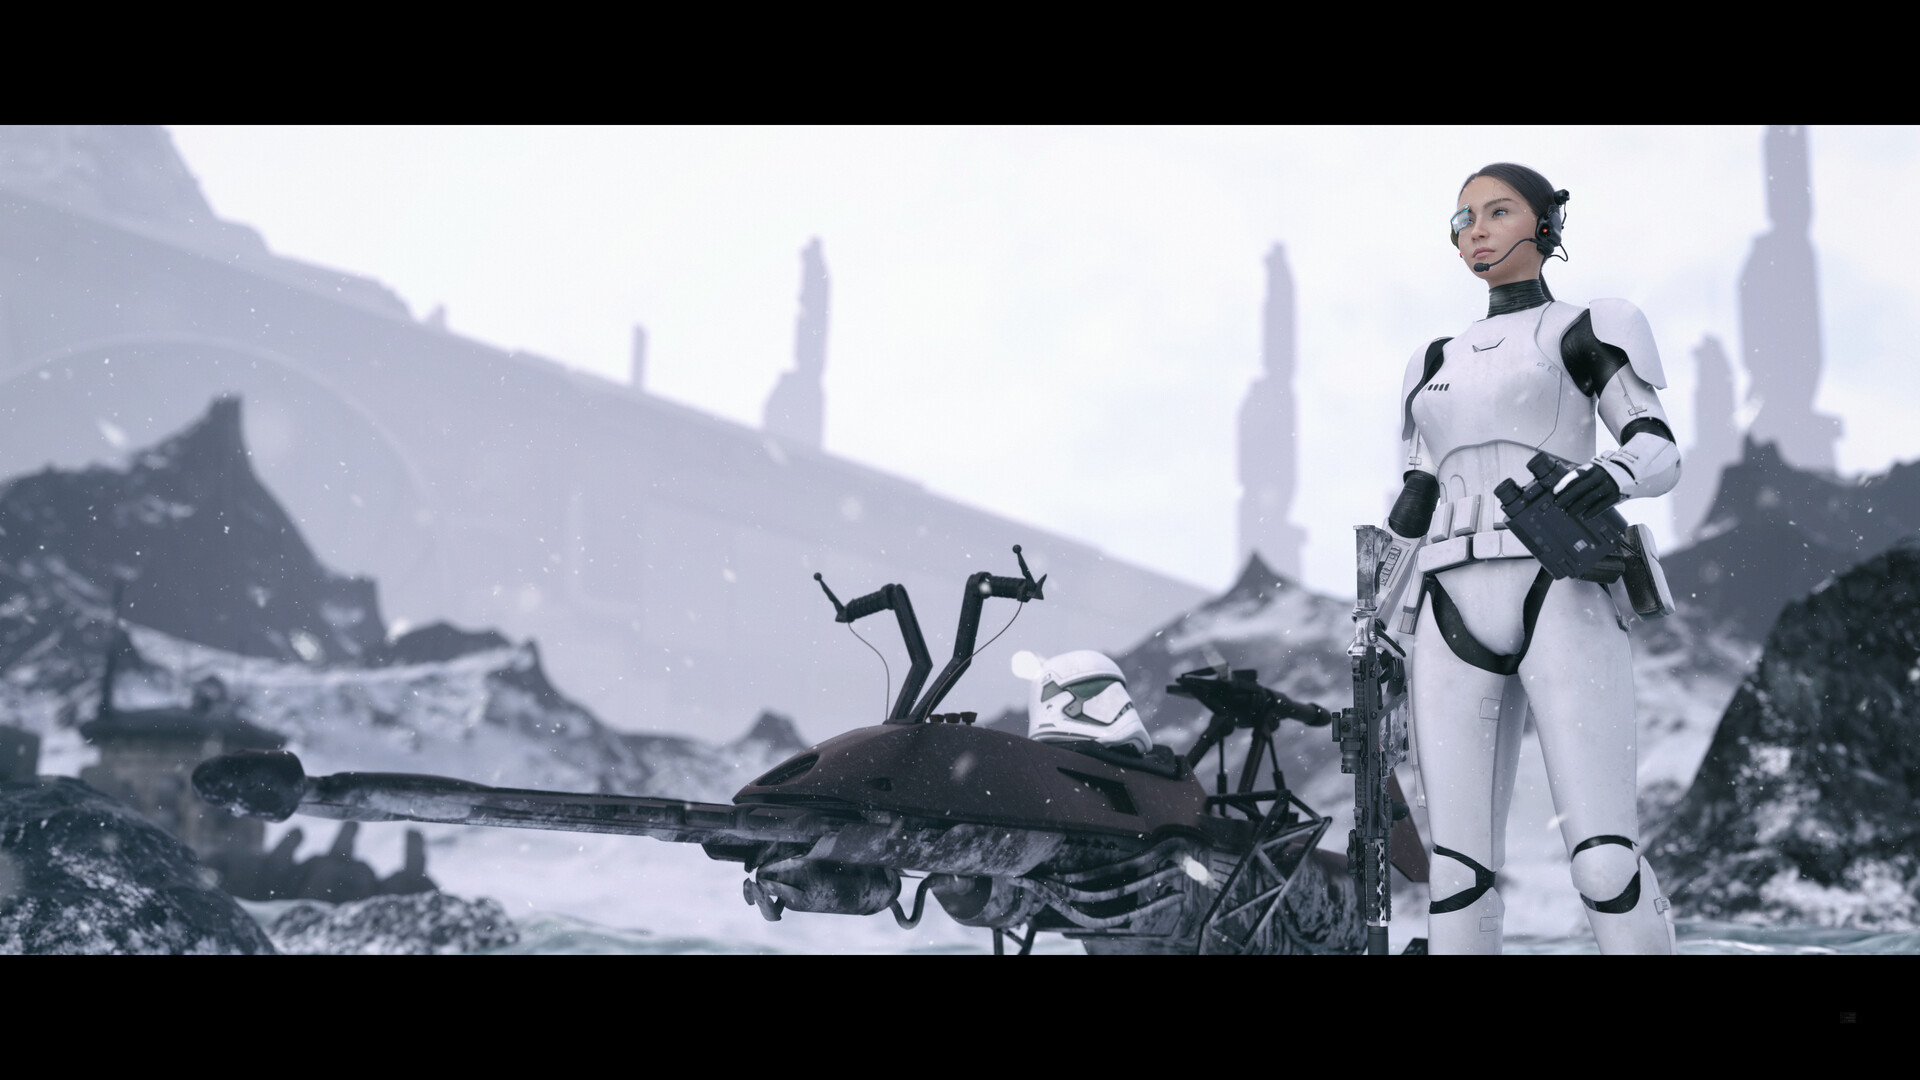 Imperial Forces Star Wars Women Stormtrooper Science Fiction Speeder Bike Vehicle Standing ArtStatio 1920x1080